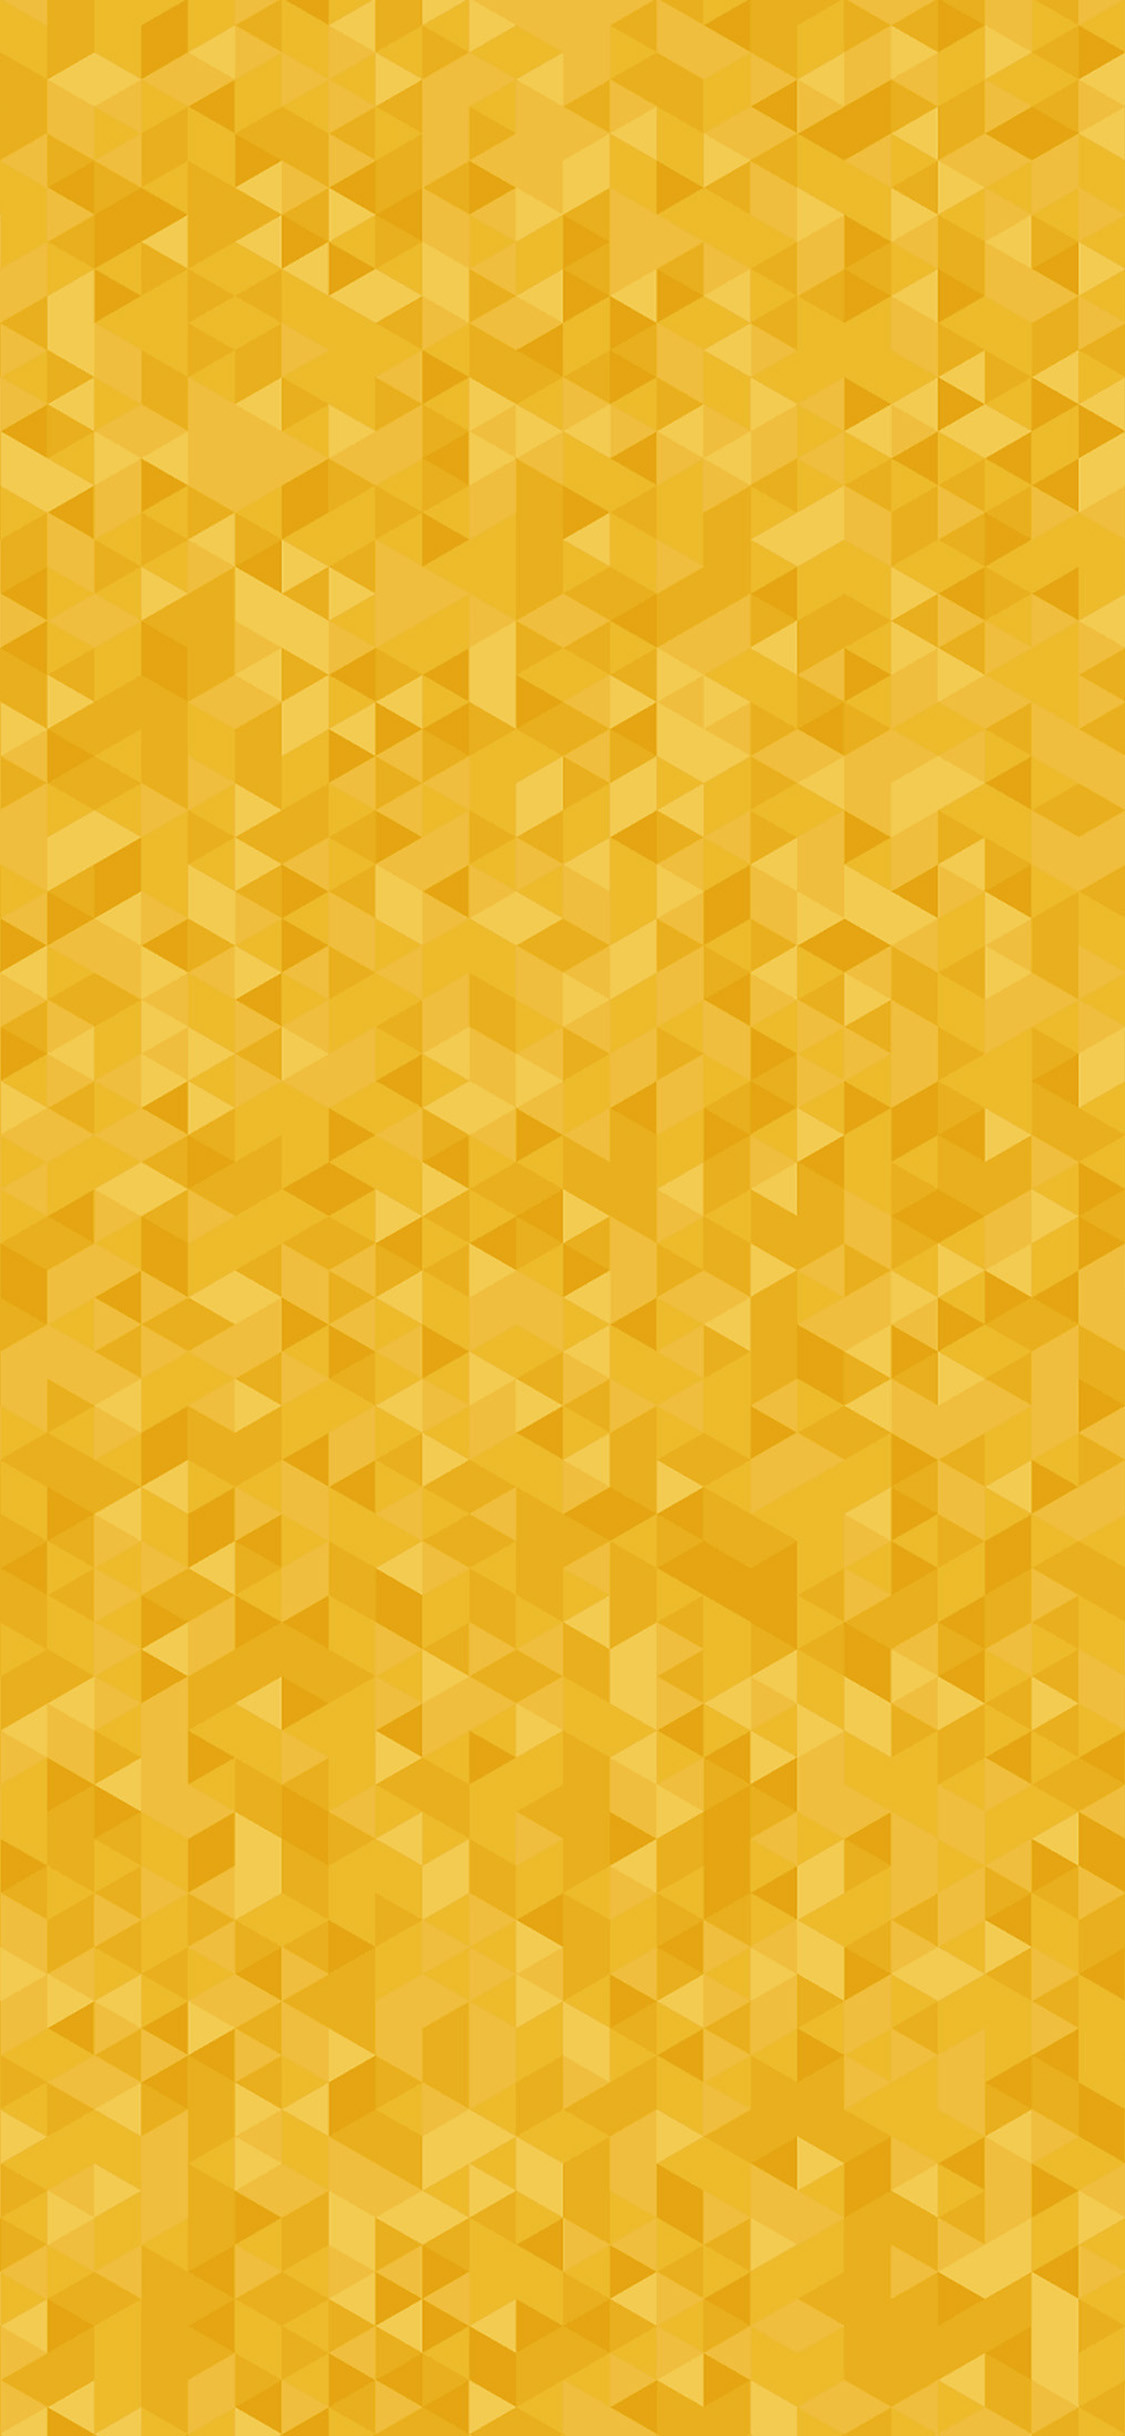 1125x2436 Yellow diamond abstract pattern iPhone 8 Wallpaper